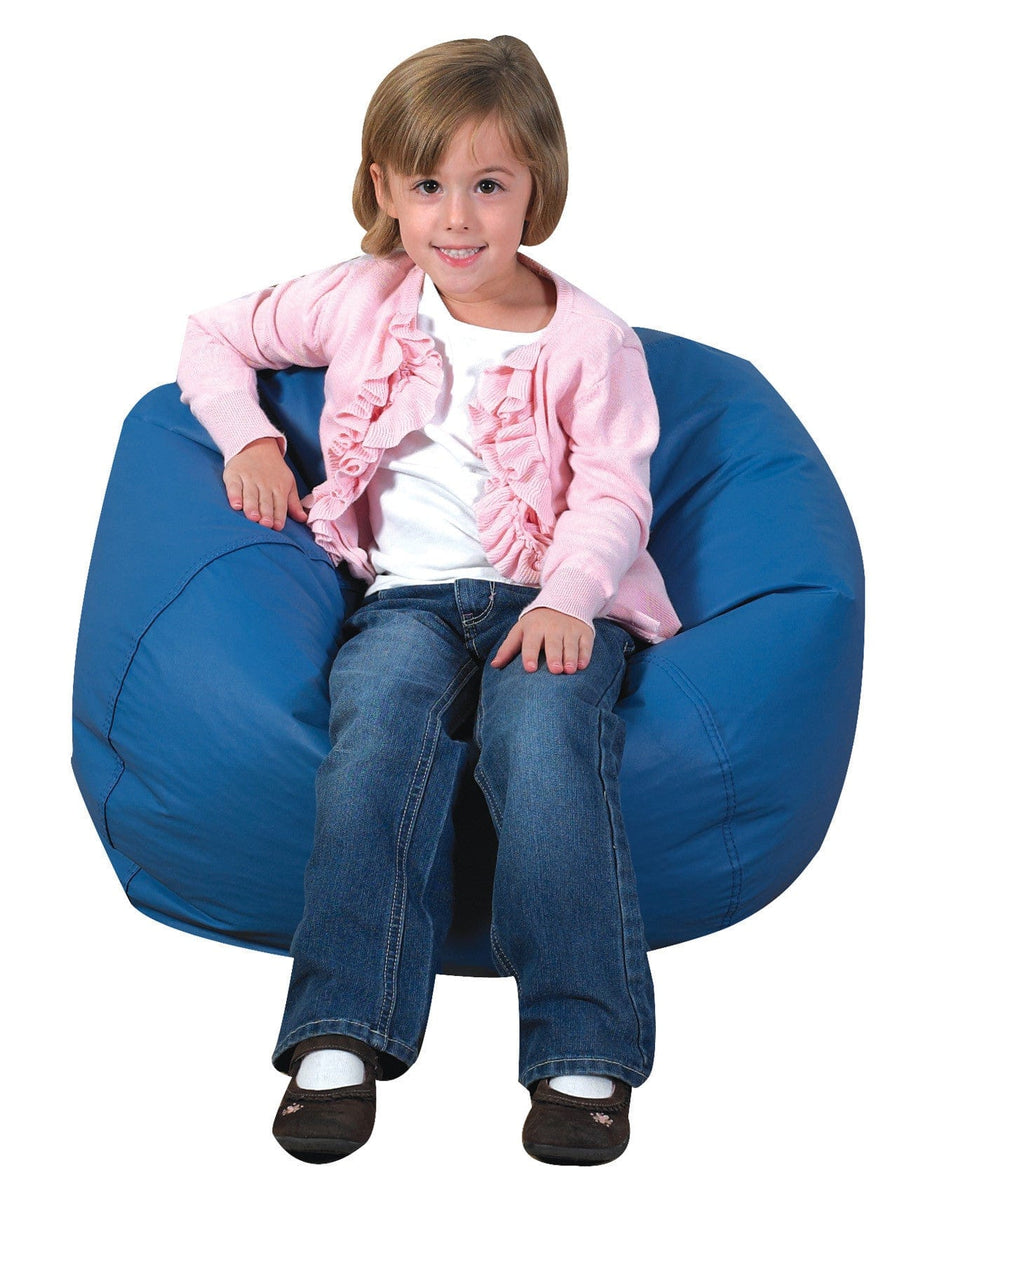 Children's Factory CF610-035 26" Round Bean Bag Chair